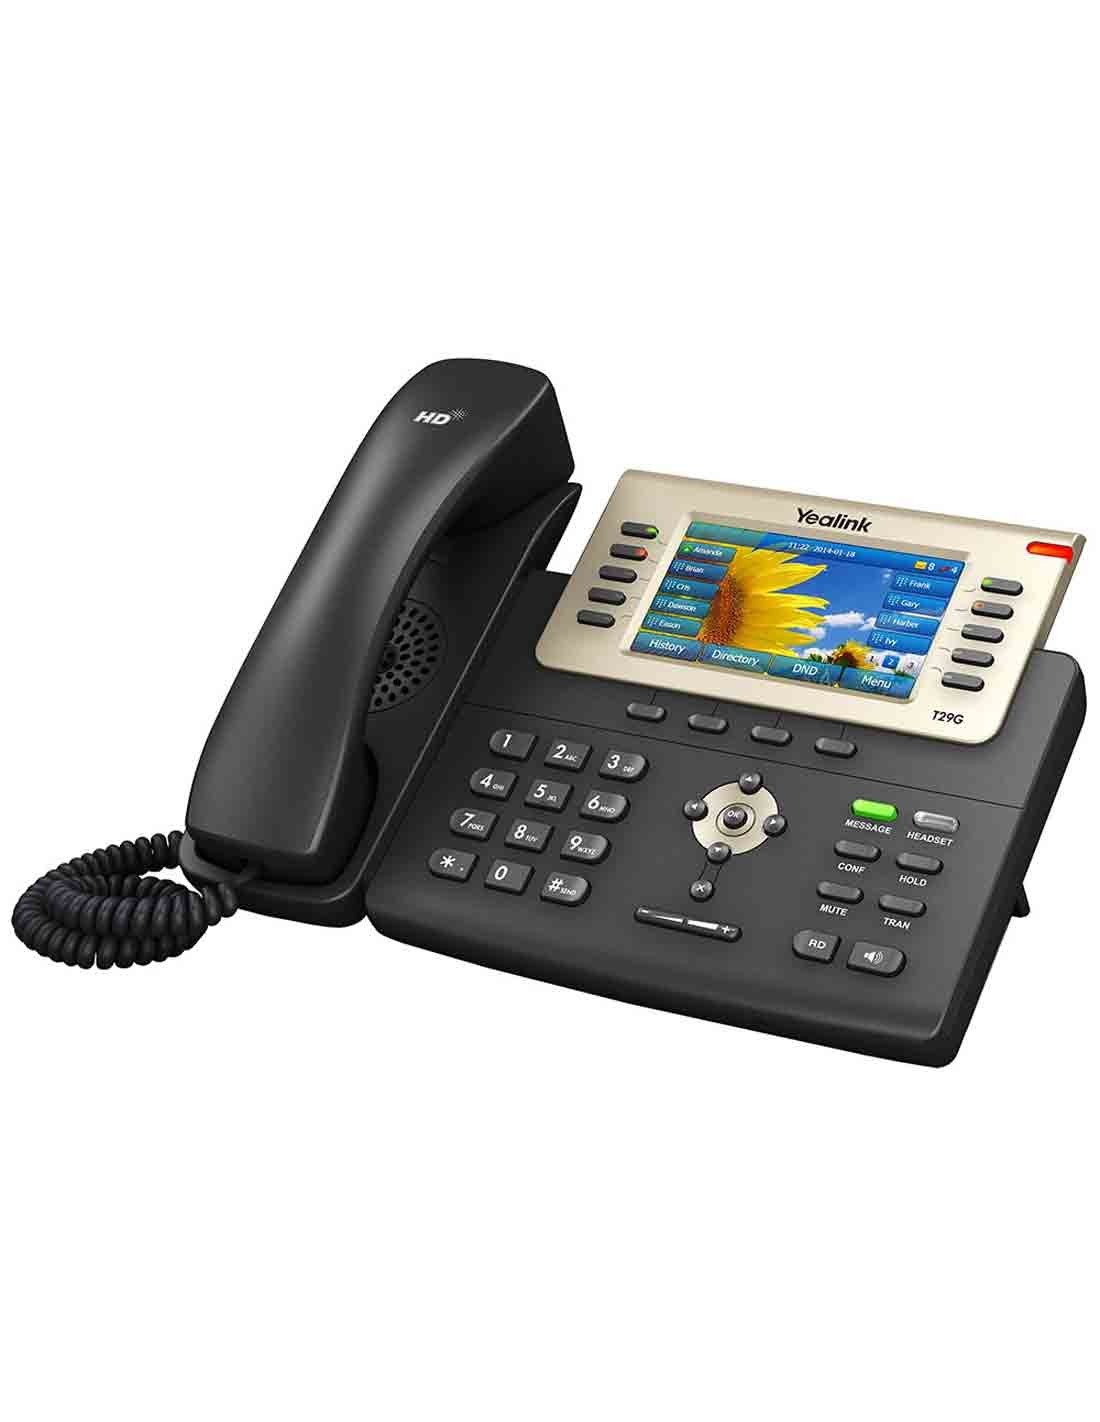 Yealink SIP-T29G Gigabit VoIP Phone at a Cheap price in Dubai Online Store